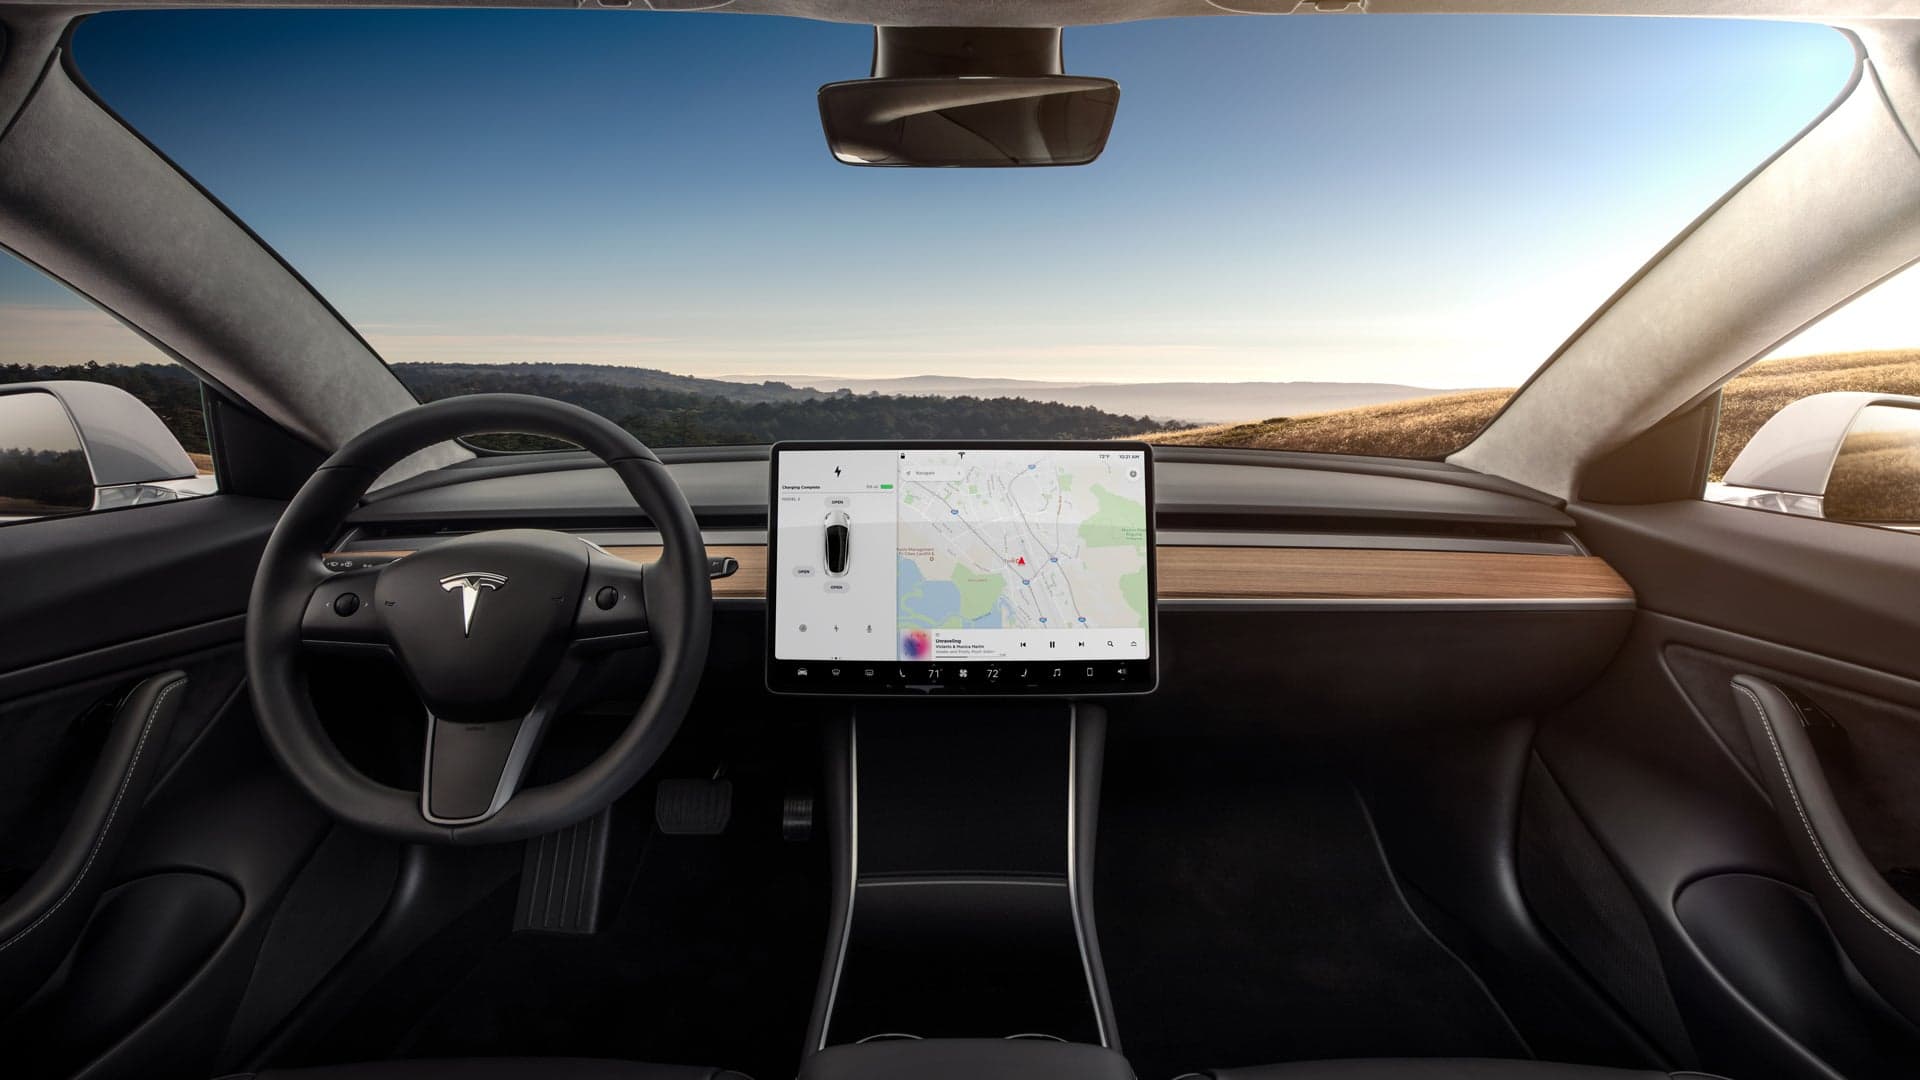 Check Out the Tesla Model 3’s Spacious Interior